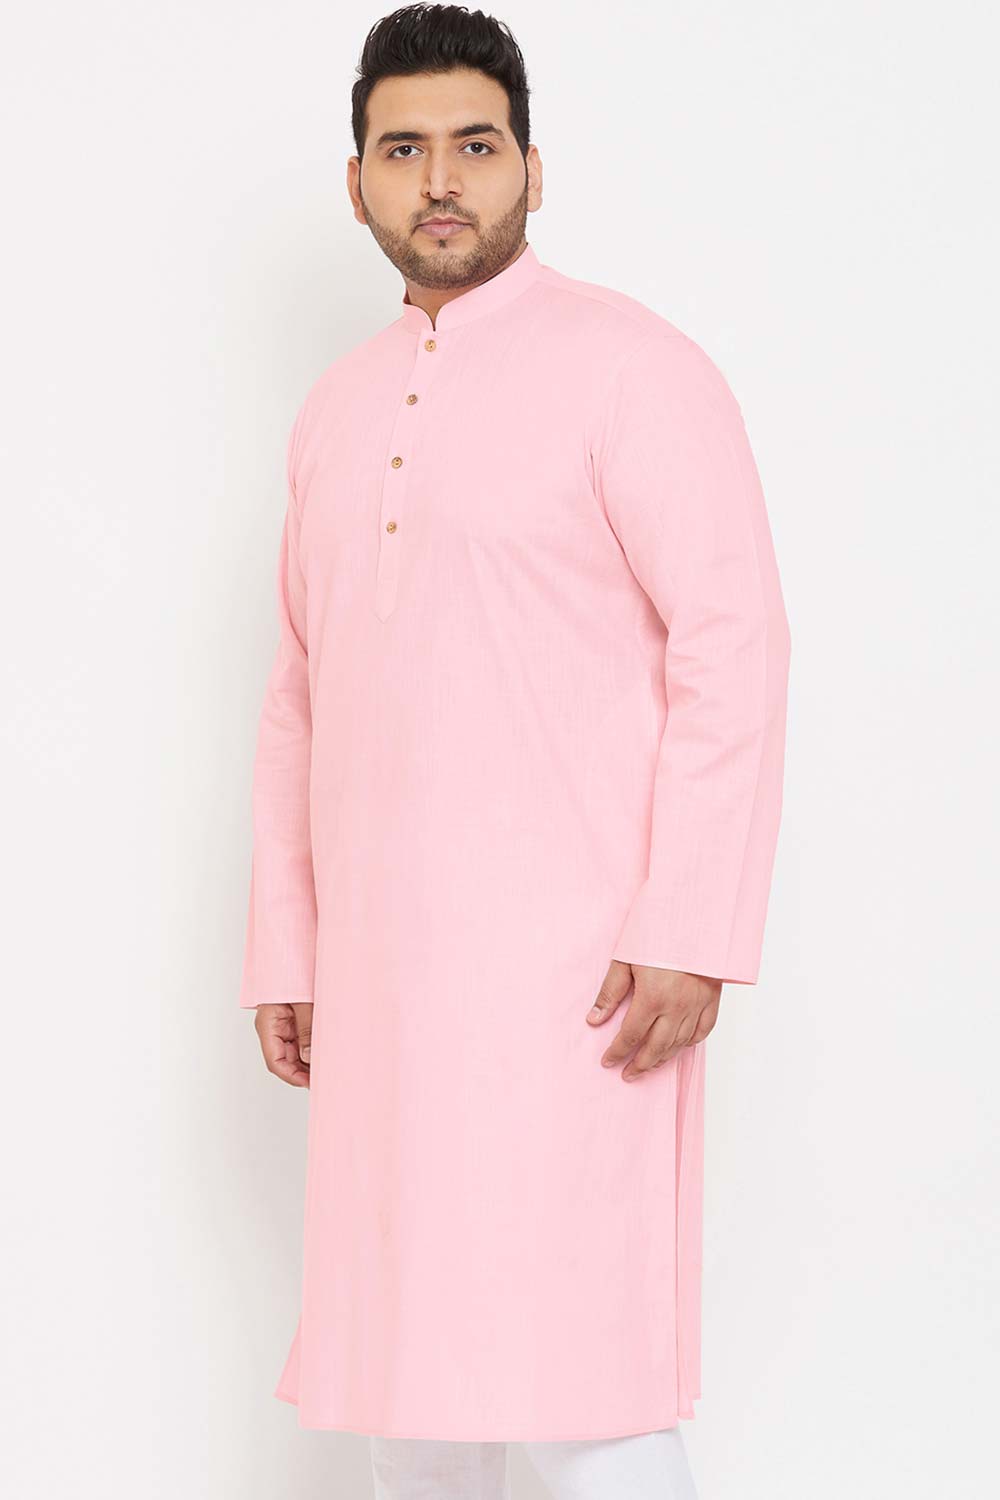 Buy Men's Cotton Blend Solid Kurta in Pink - Side